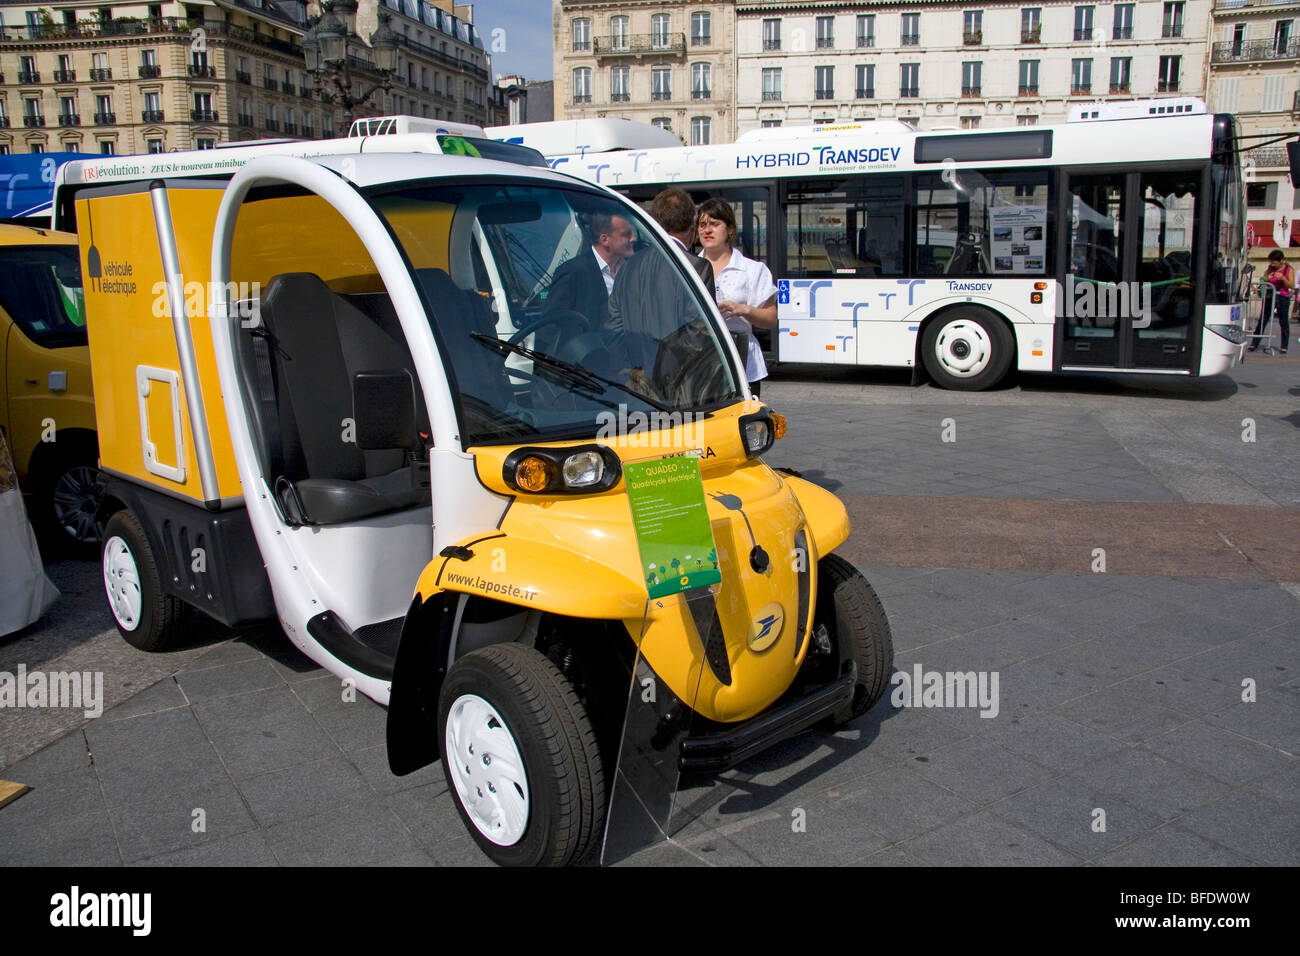 Electric concept car public exhibition in front of the Hotel de Ville in Paris, France. Stock Photo